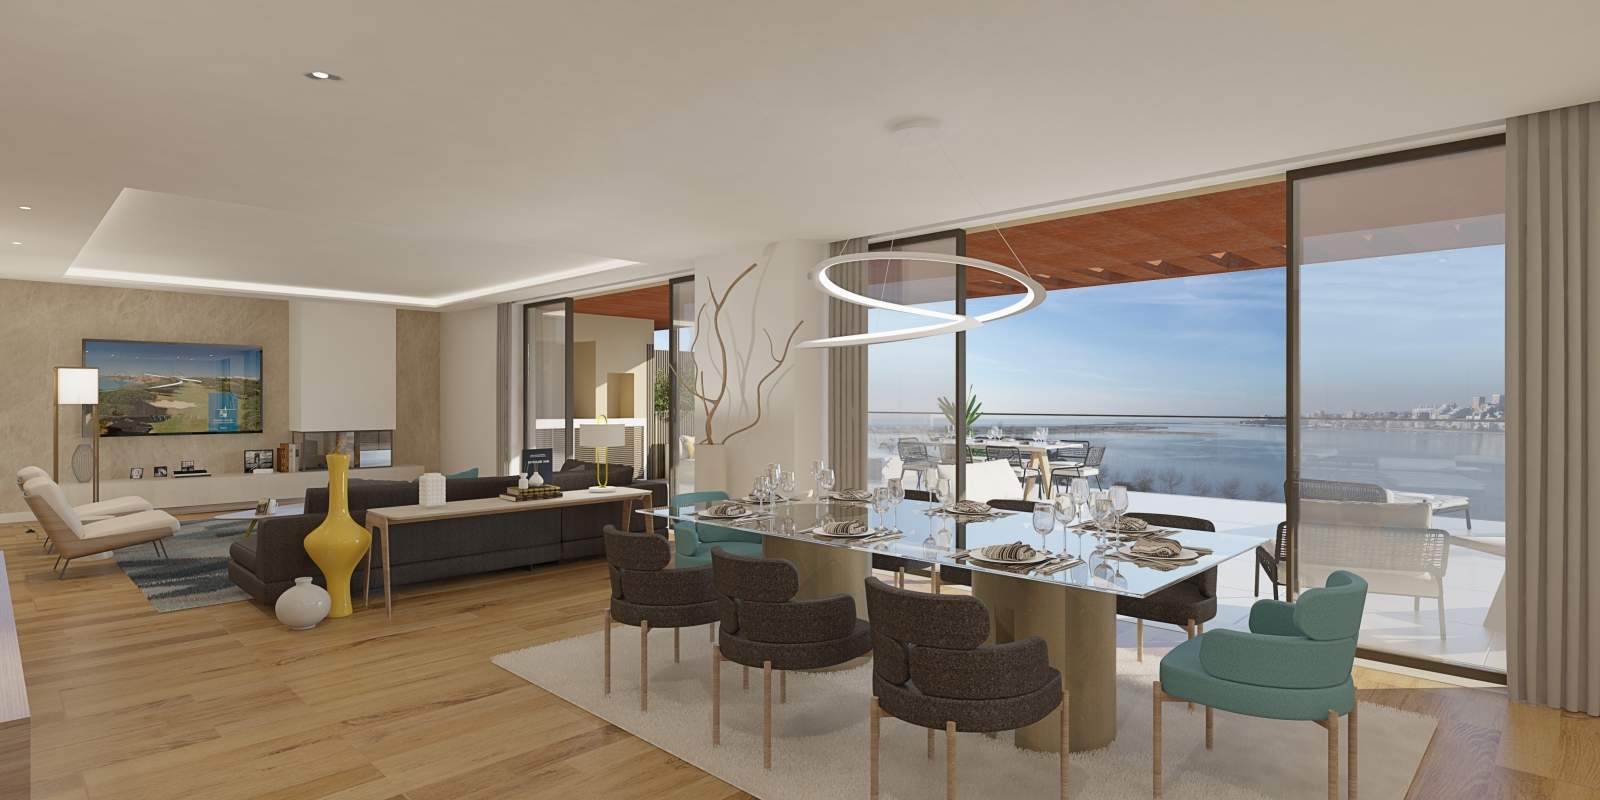 Apartment for sale with terrace, in exclusive condominium, V. N. Gaia, Porto, Portugal_176113